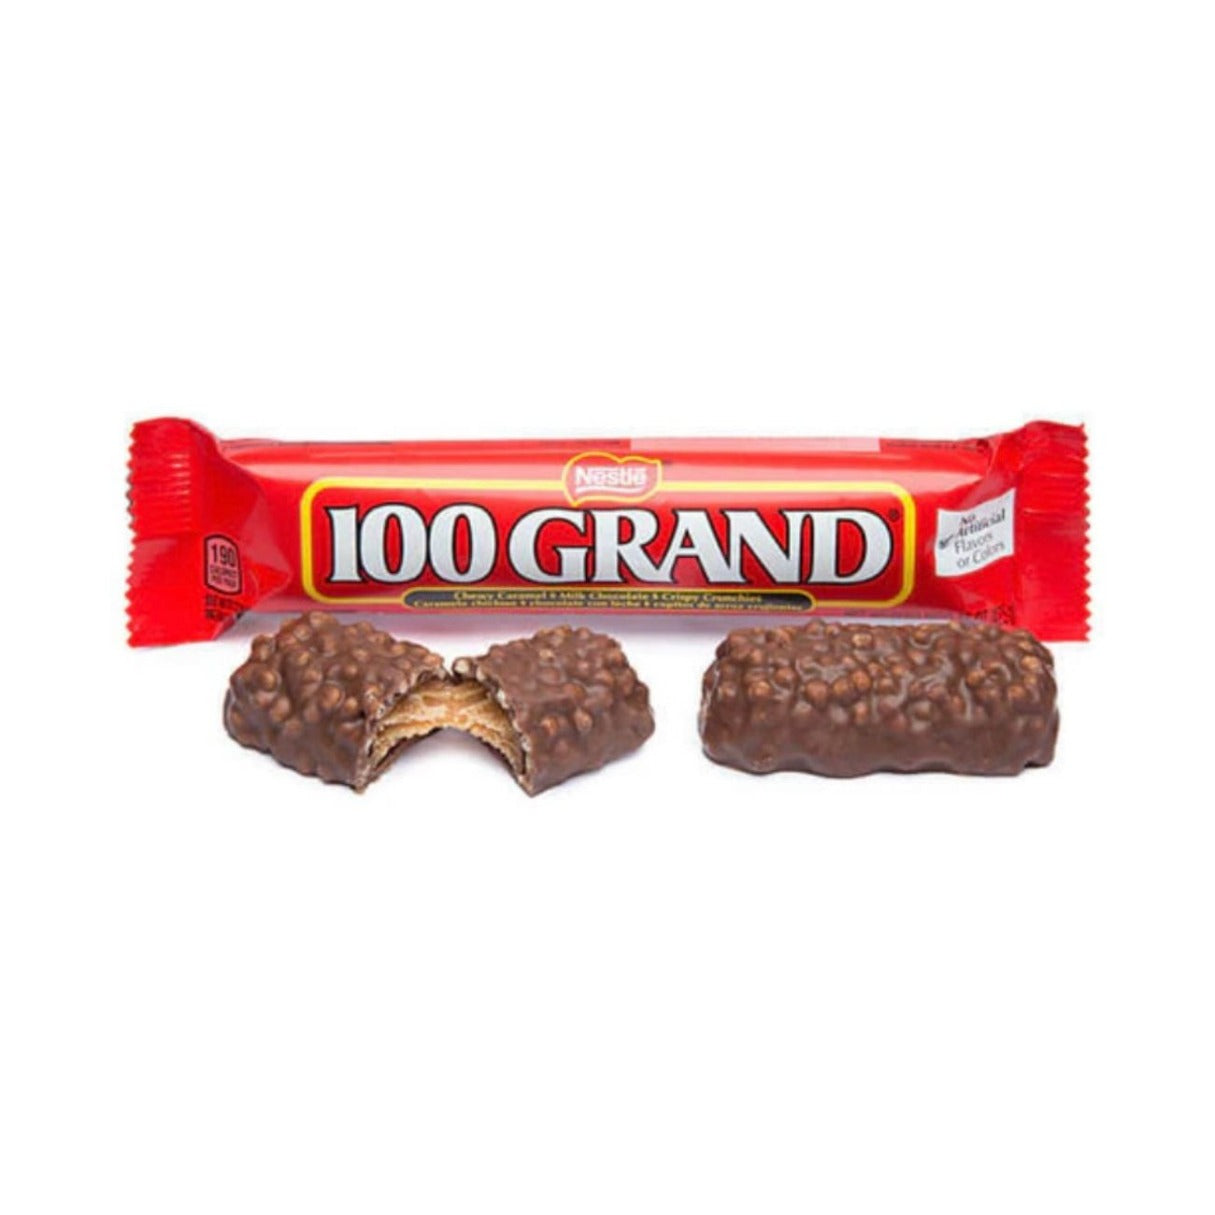 100 Grand Bar 1.05oz - 36ct